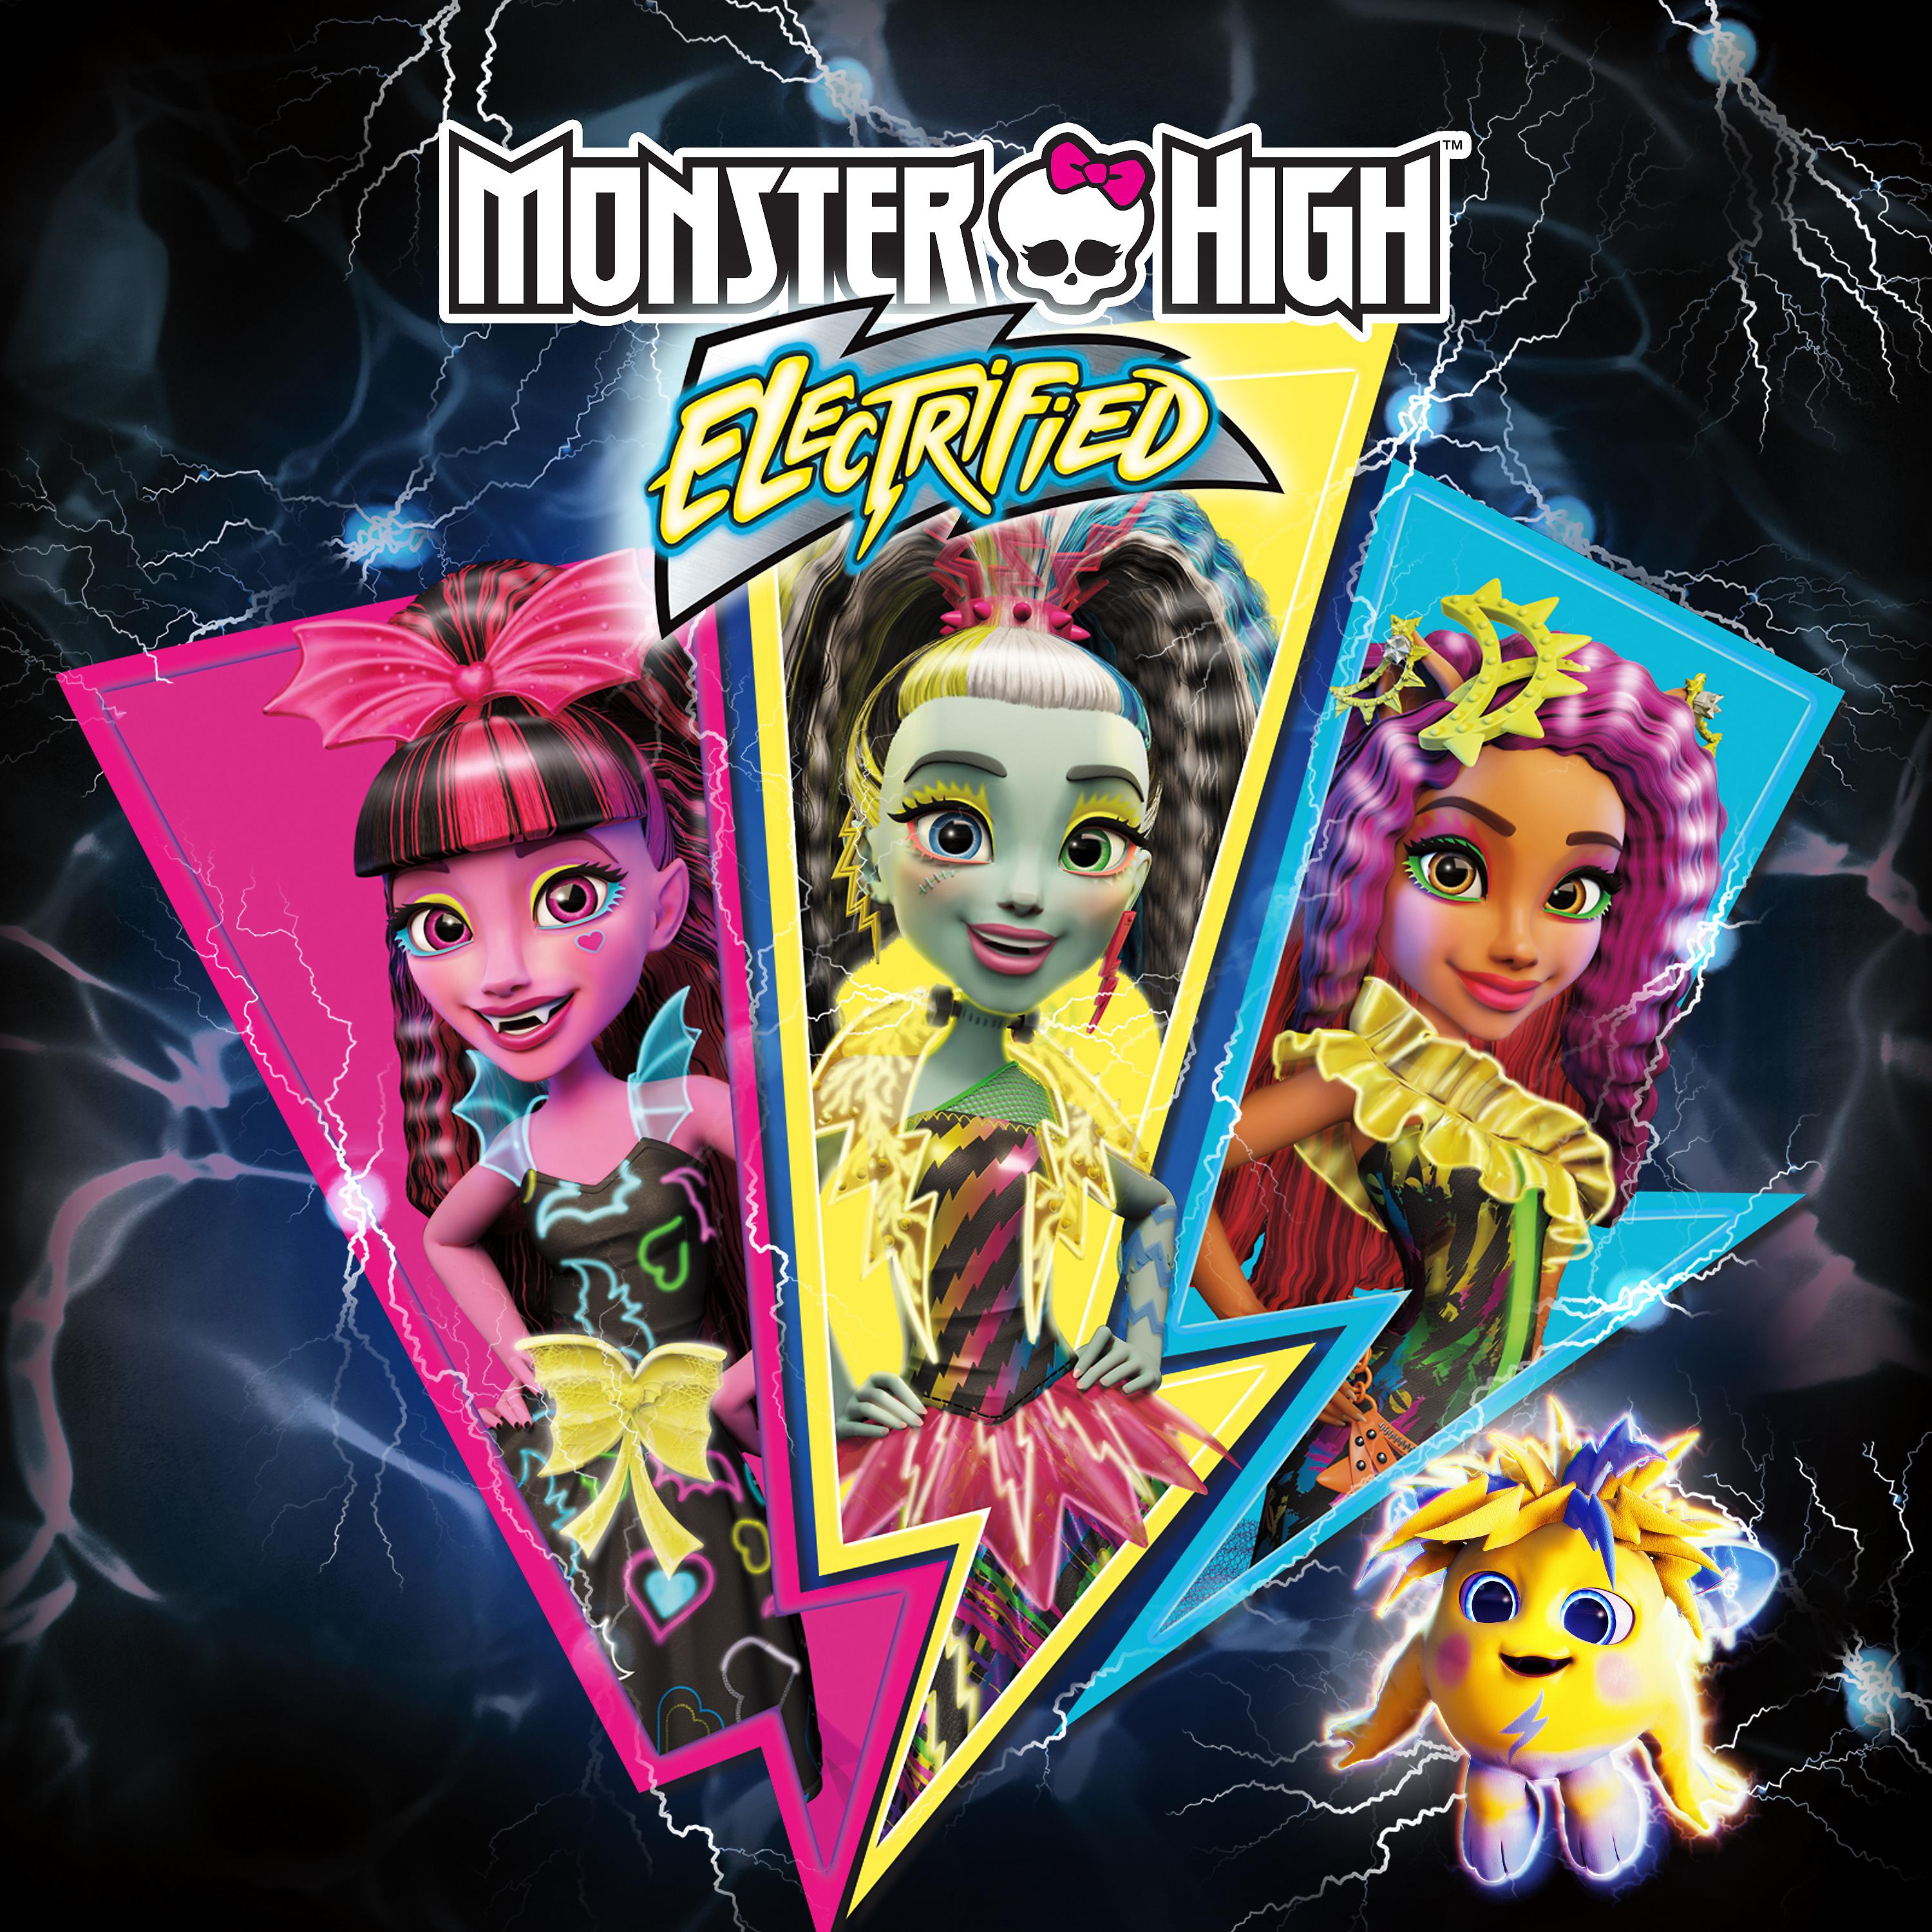 Хай треки. Монстер Хай Electrified. Monster High Electrified. Monster High - Электризованные / Electrified. Monster High Electric Fashion.